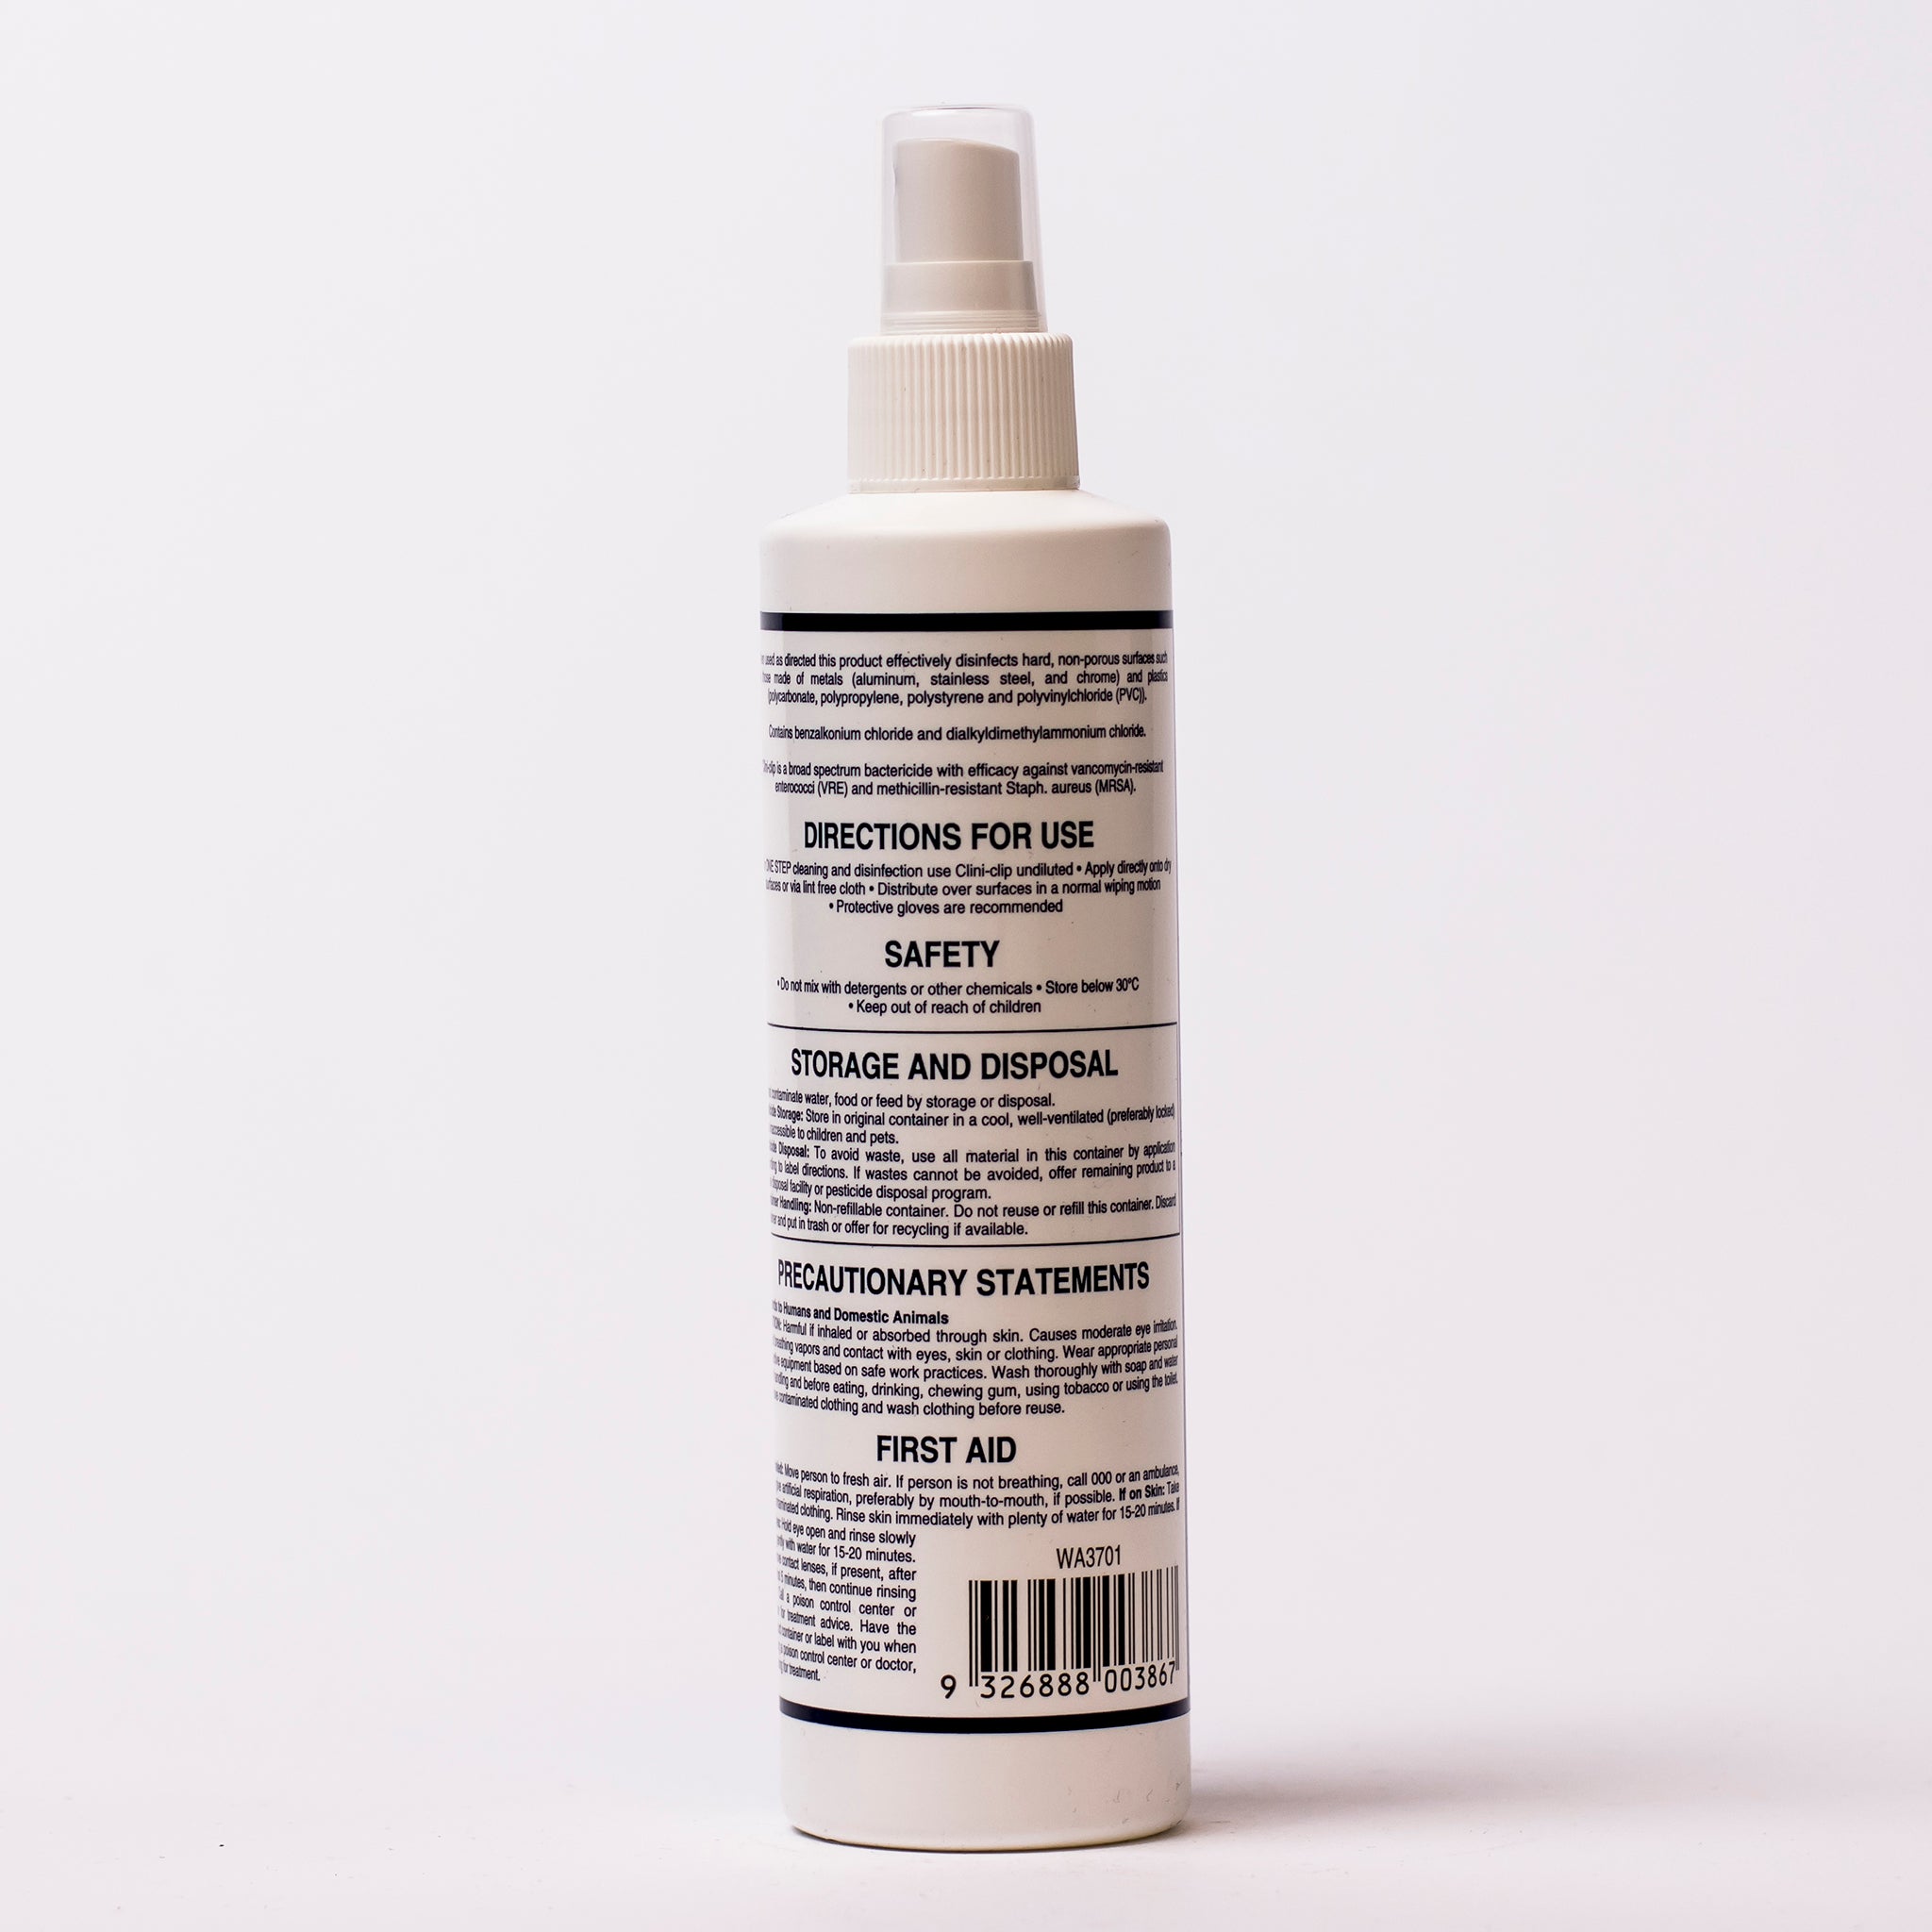 Wahl Clini Clip Disinfectant Spray - 250ml